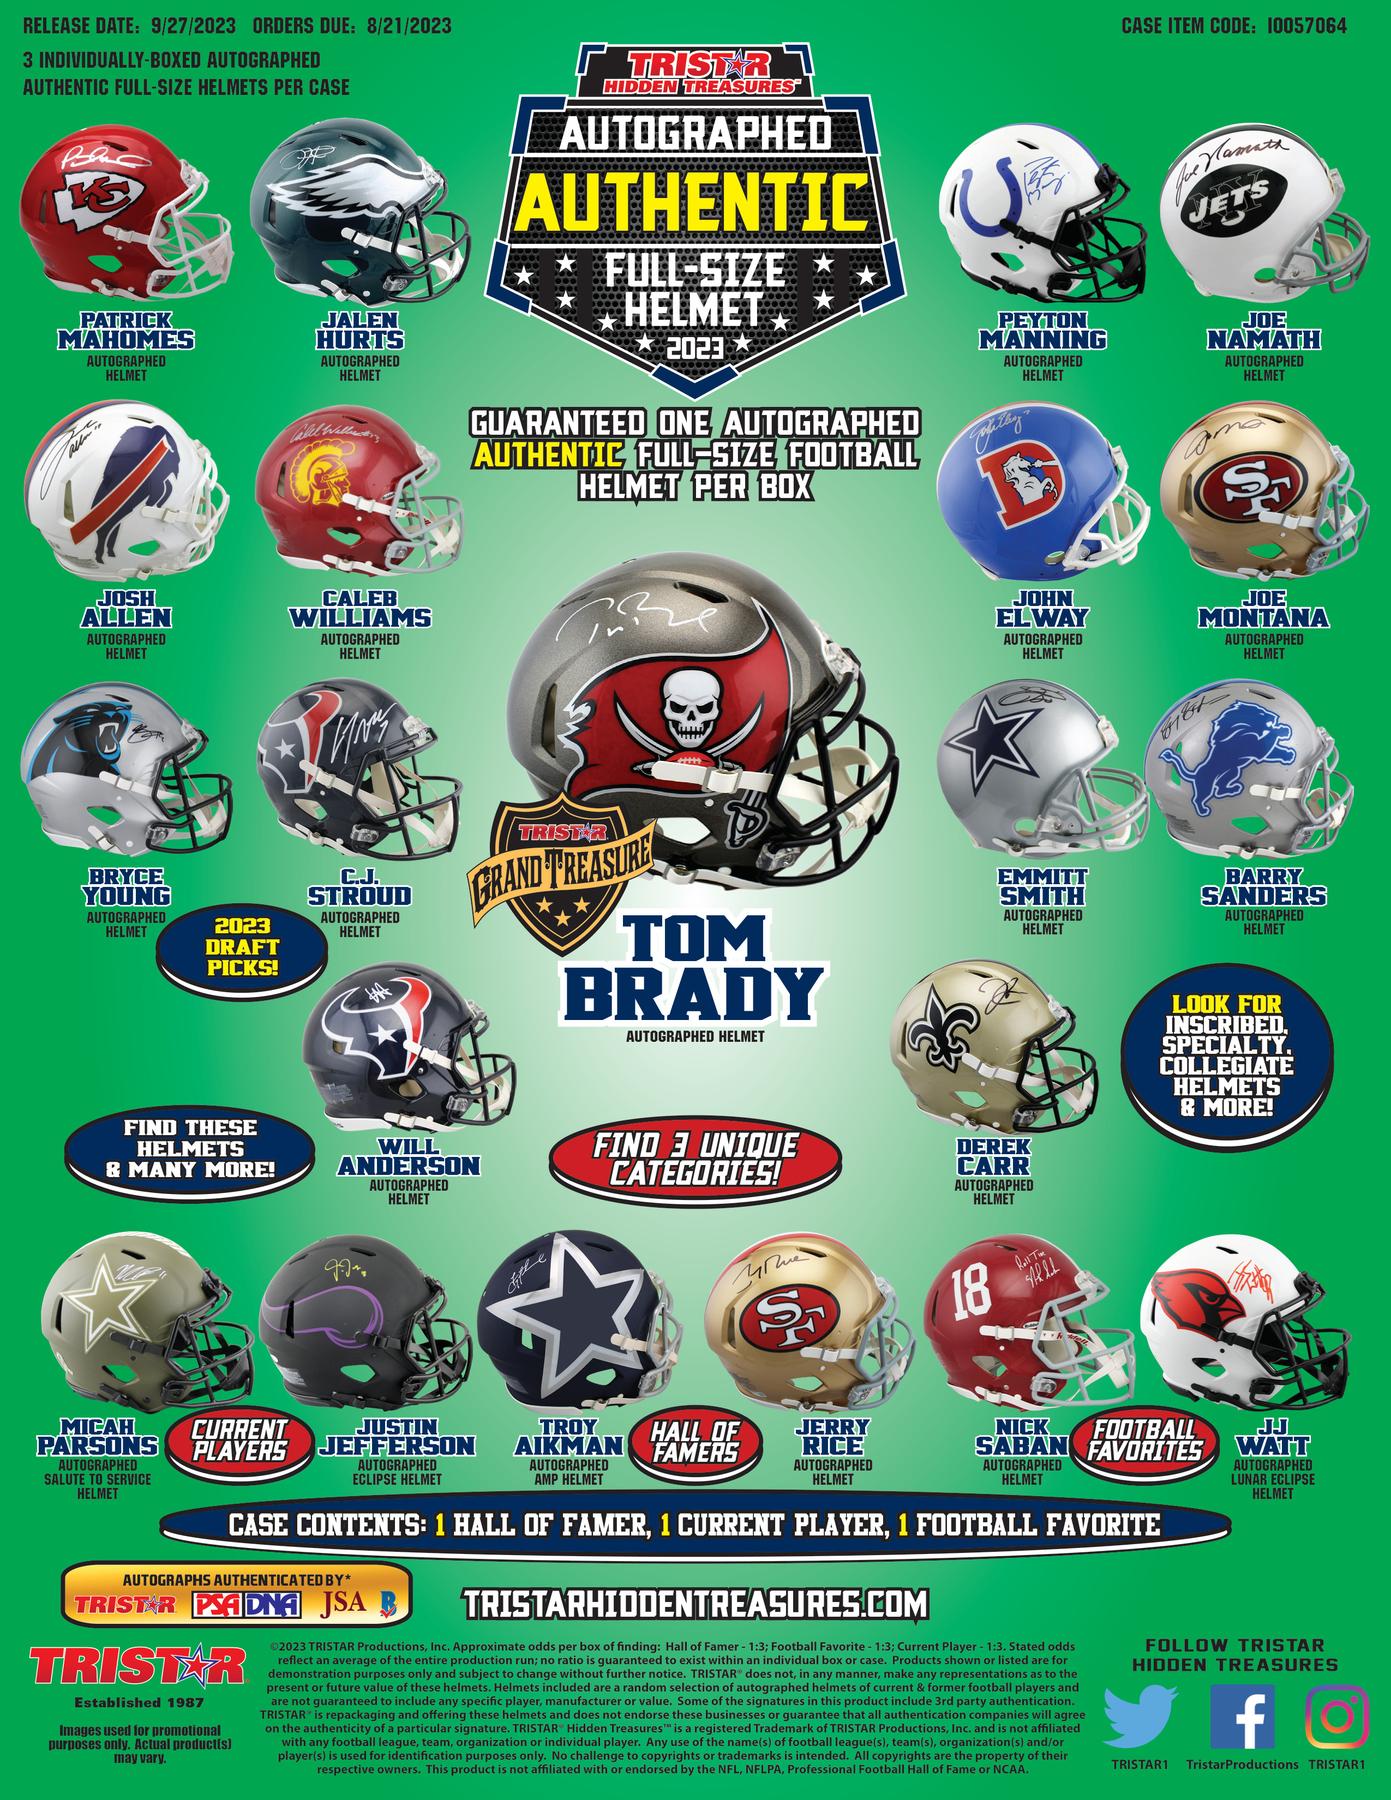 2023 Tristar Hidden Treasures Football Mini Helmet Platinum